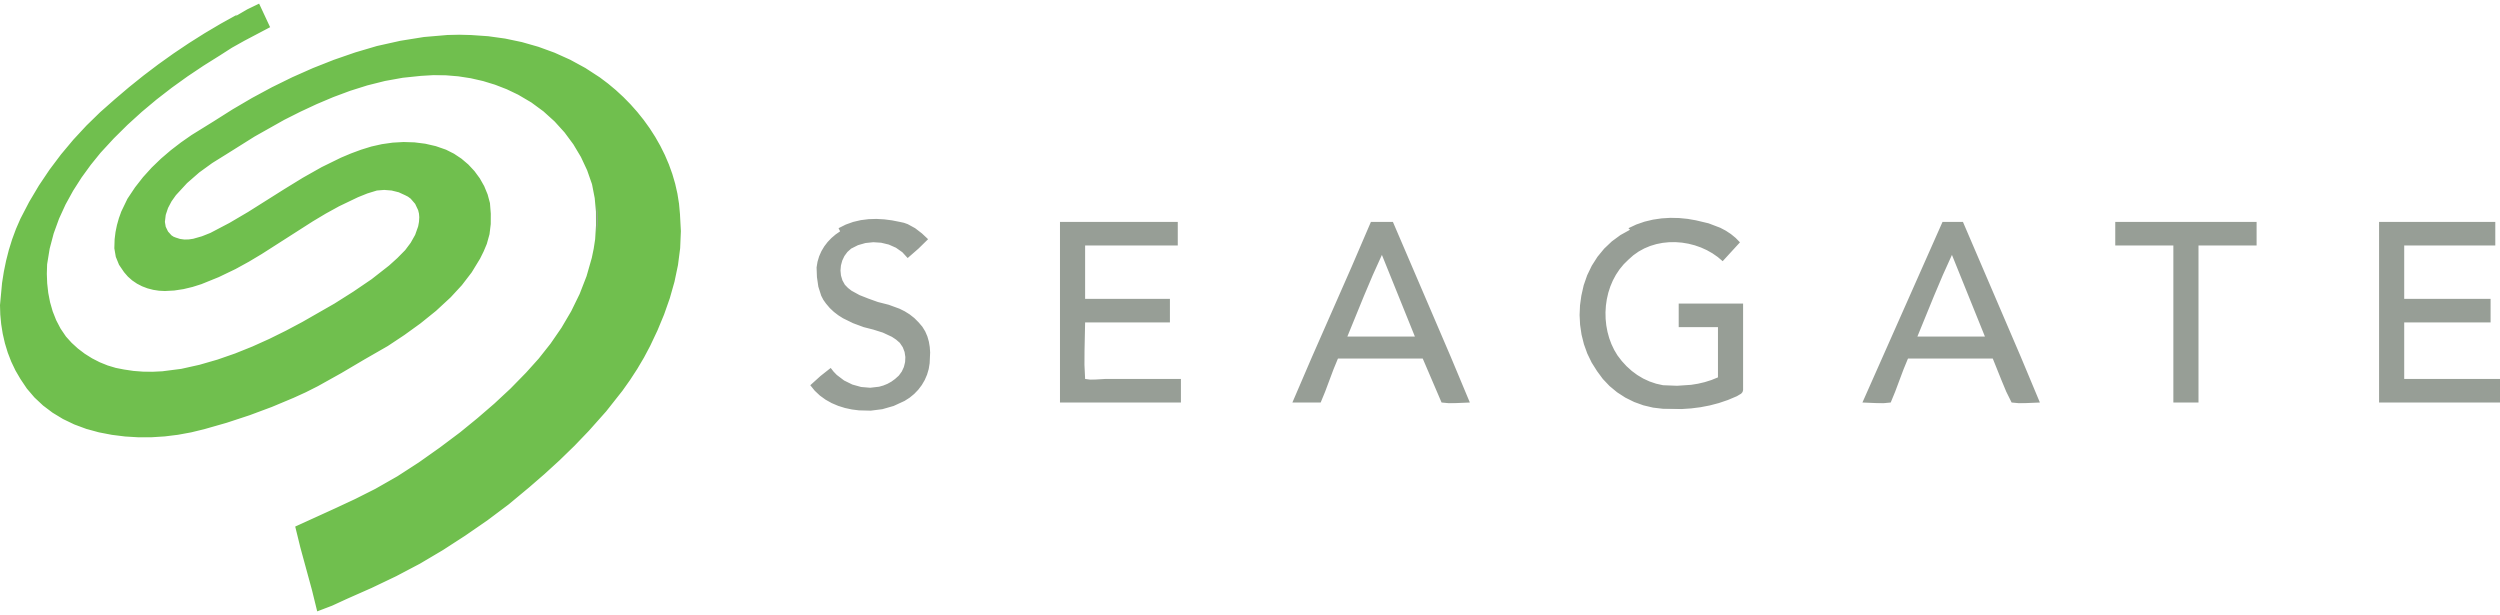 Seagate Technology Holdings Plc logo